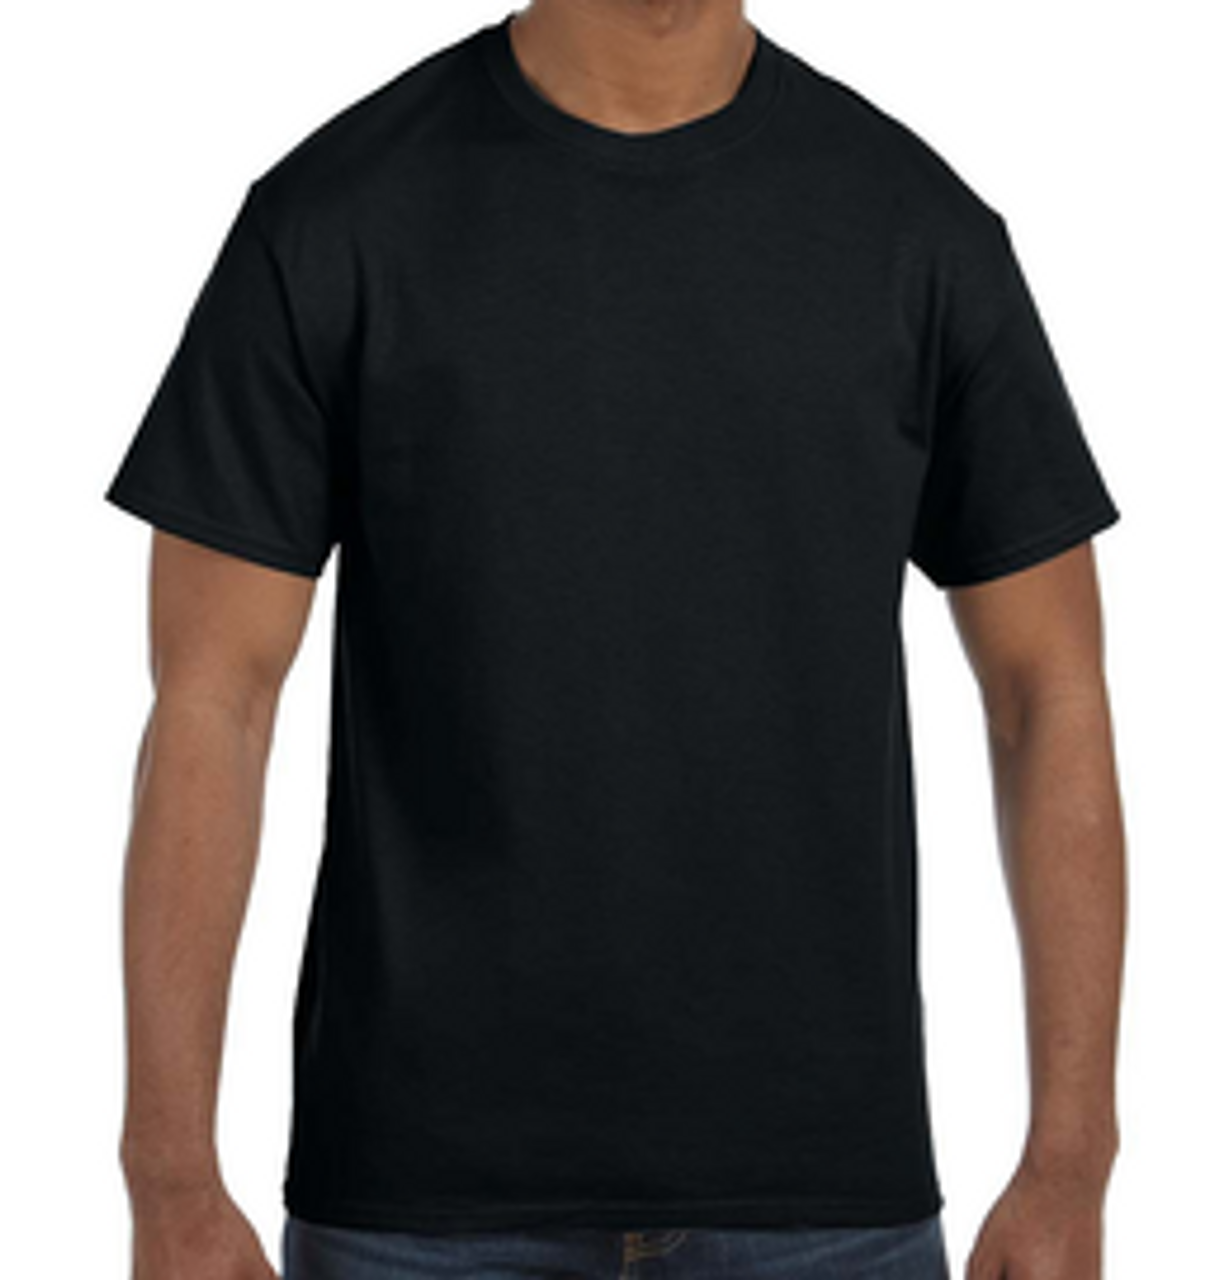 Medium - Adult - Black - Gildan - Custom T-shirt